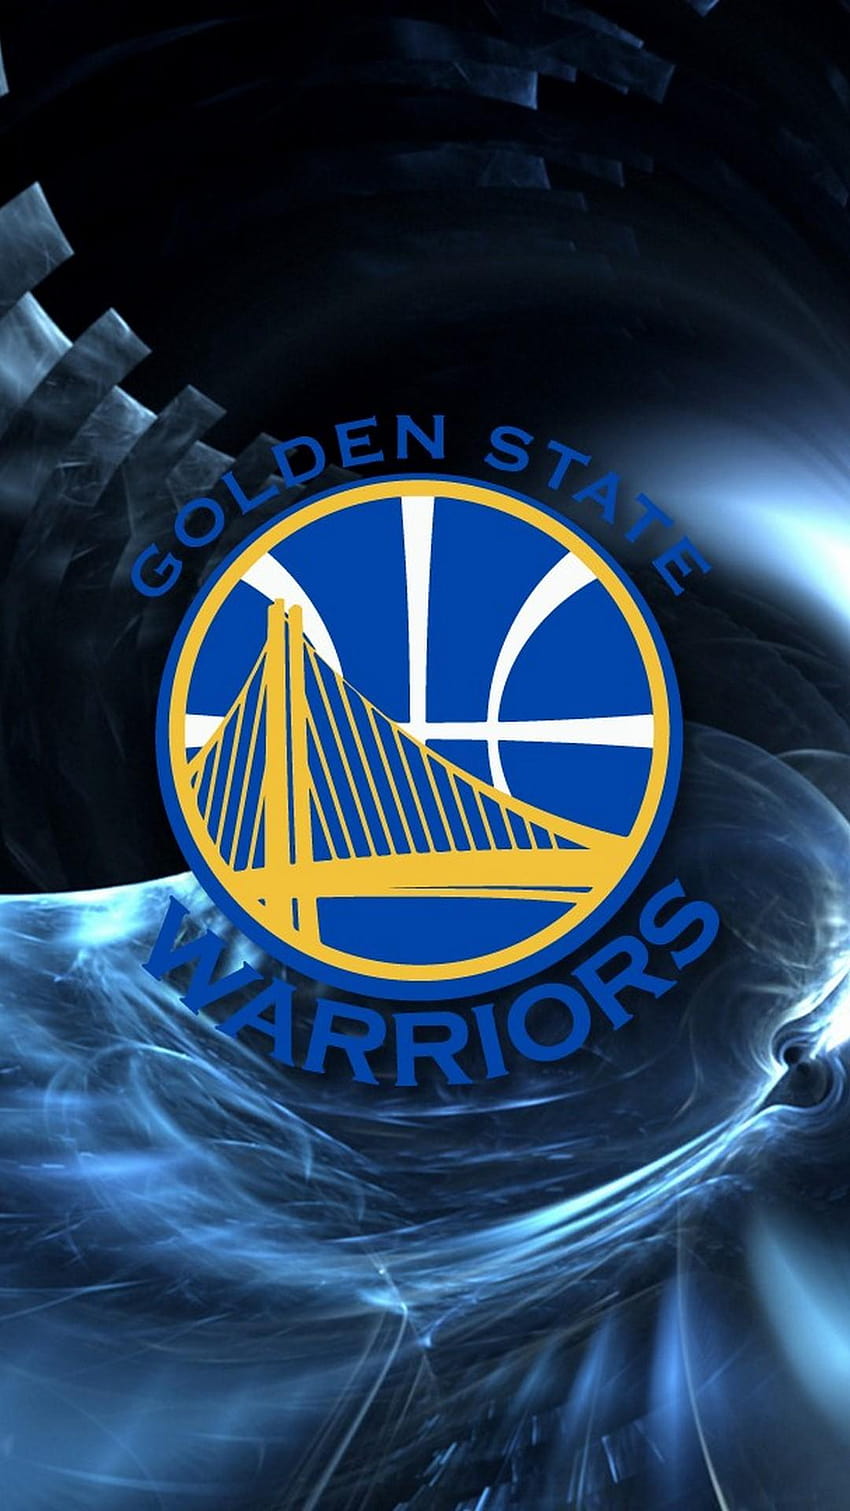 Golden State Warriors  NBA 4K wallpaper download